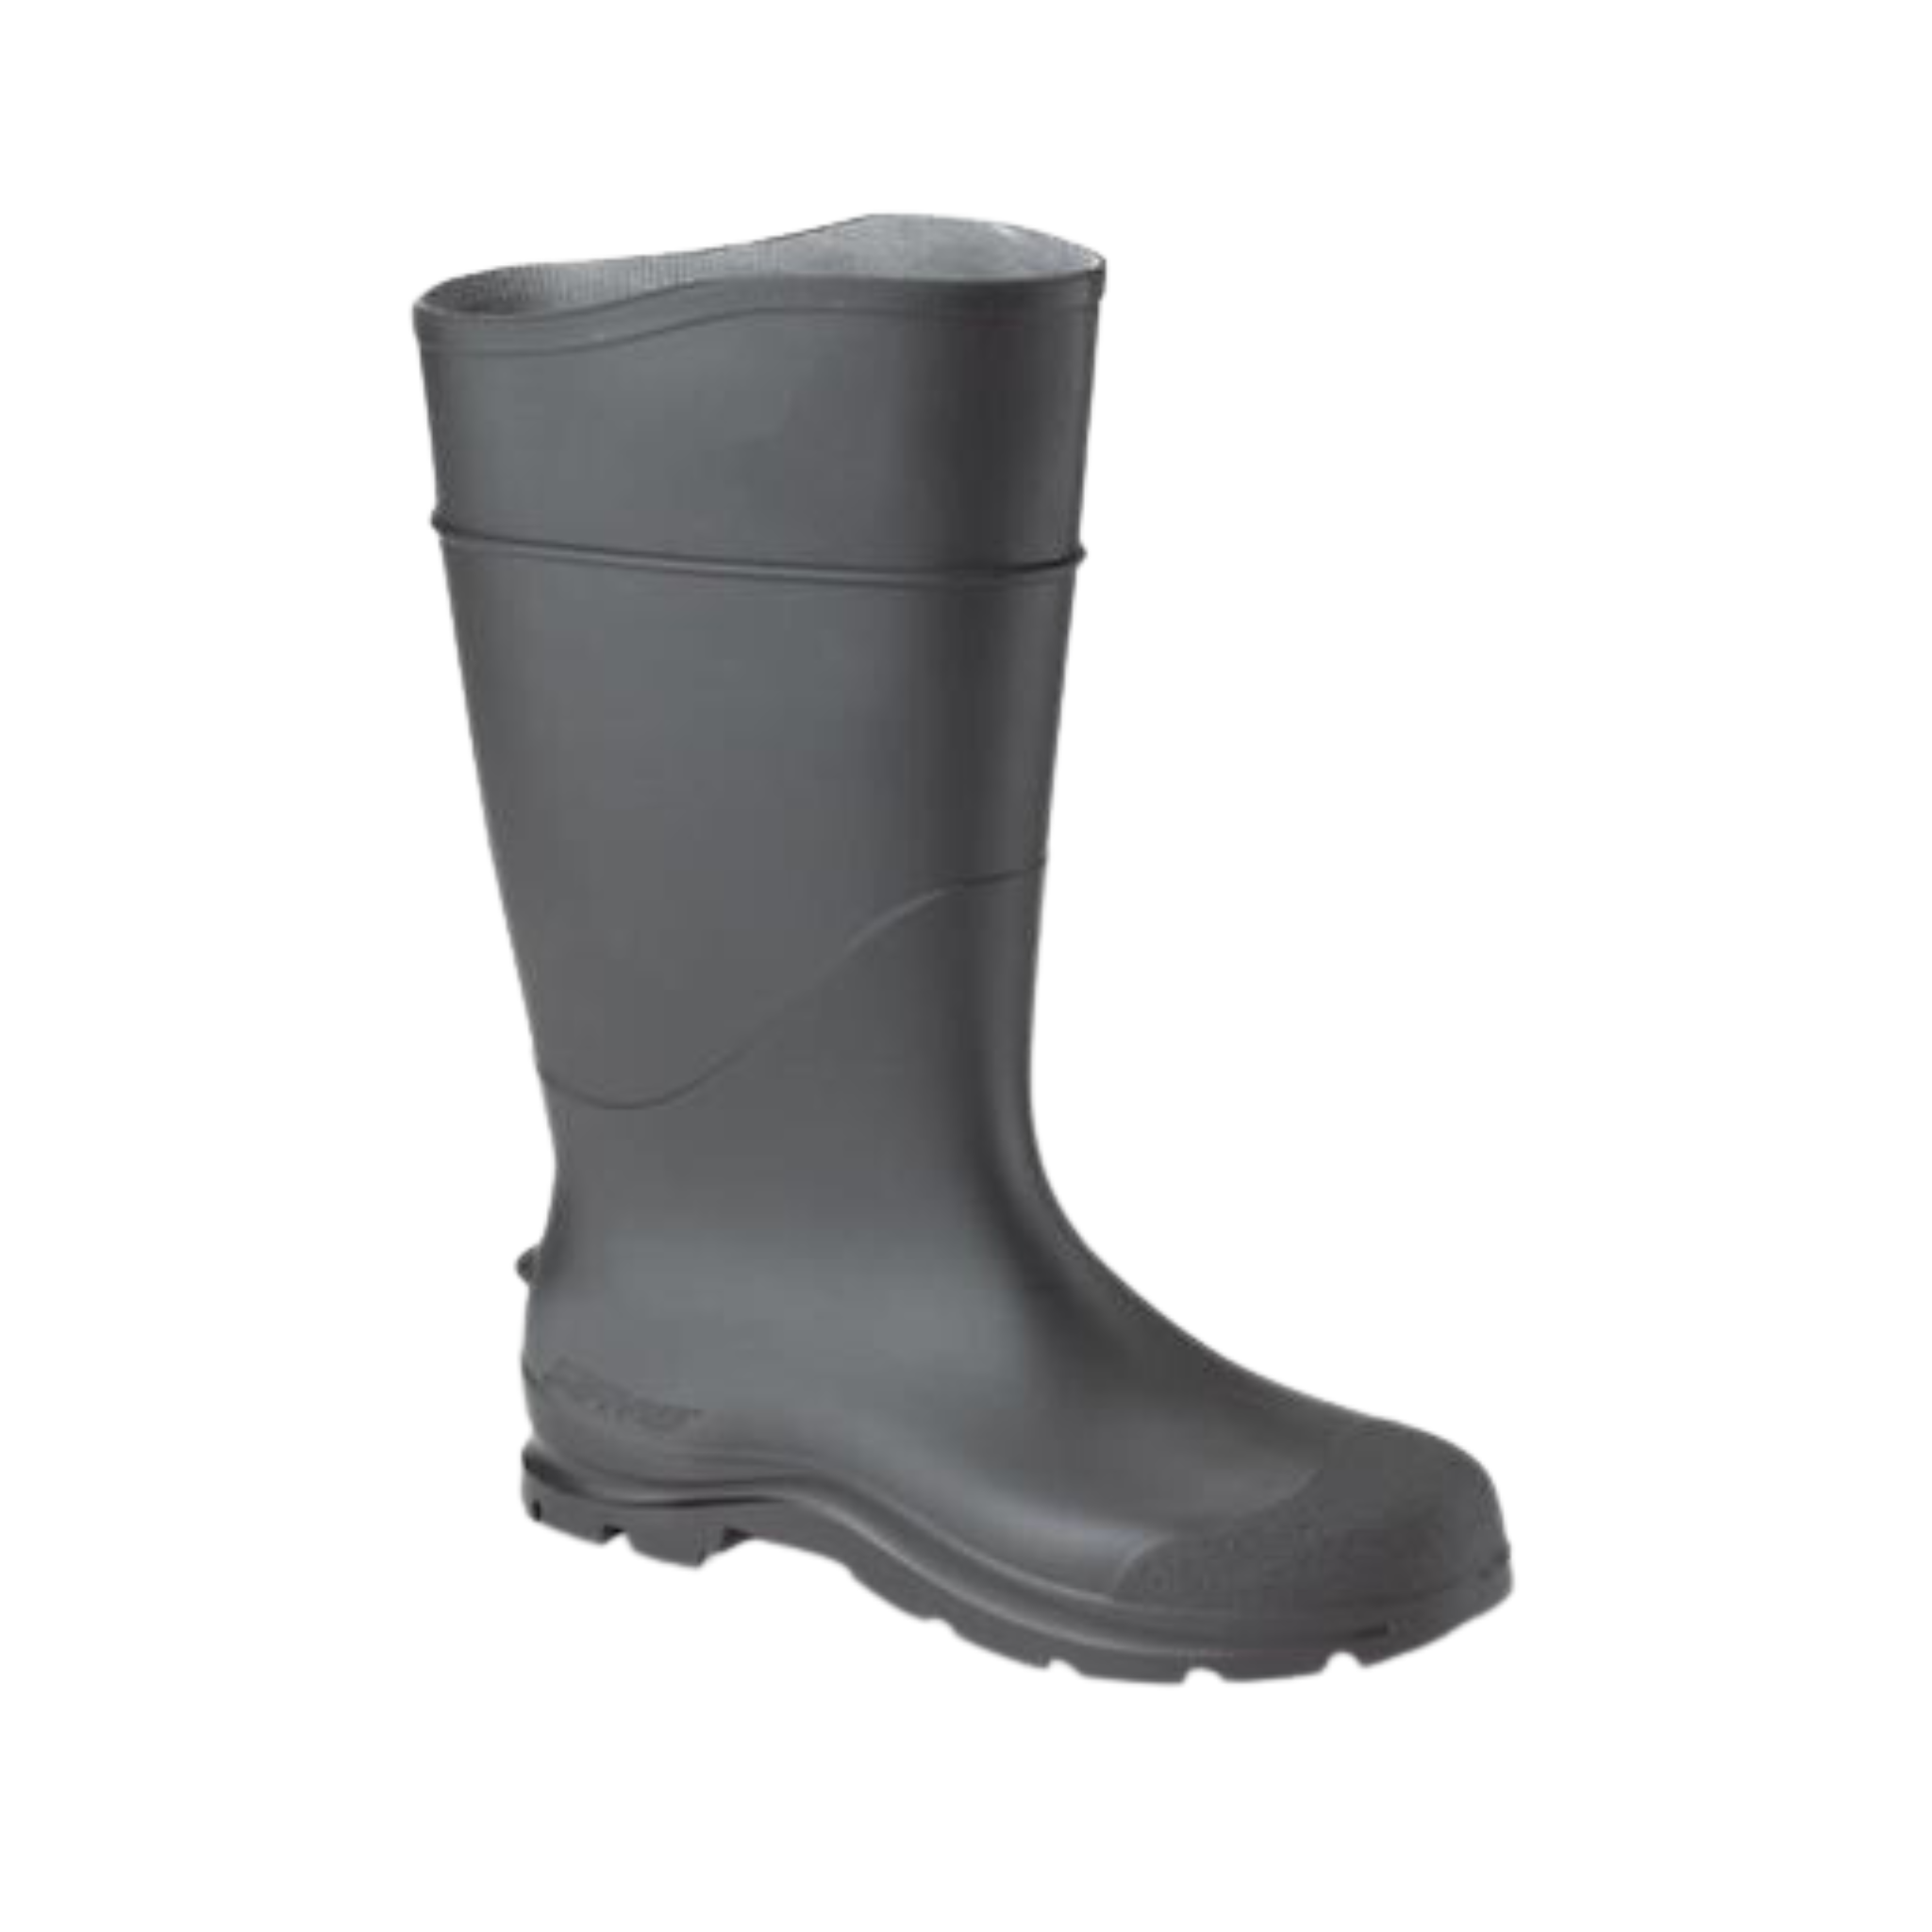 Servus Rubber Knee Rain Boots